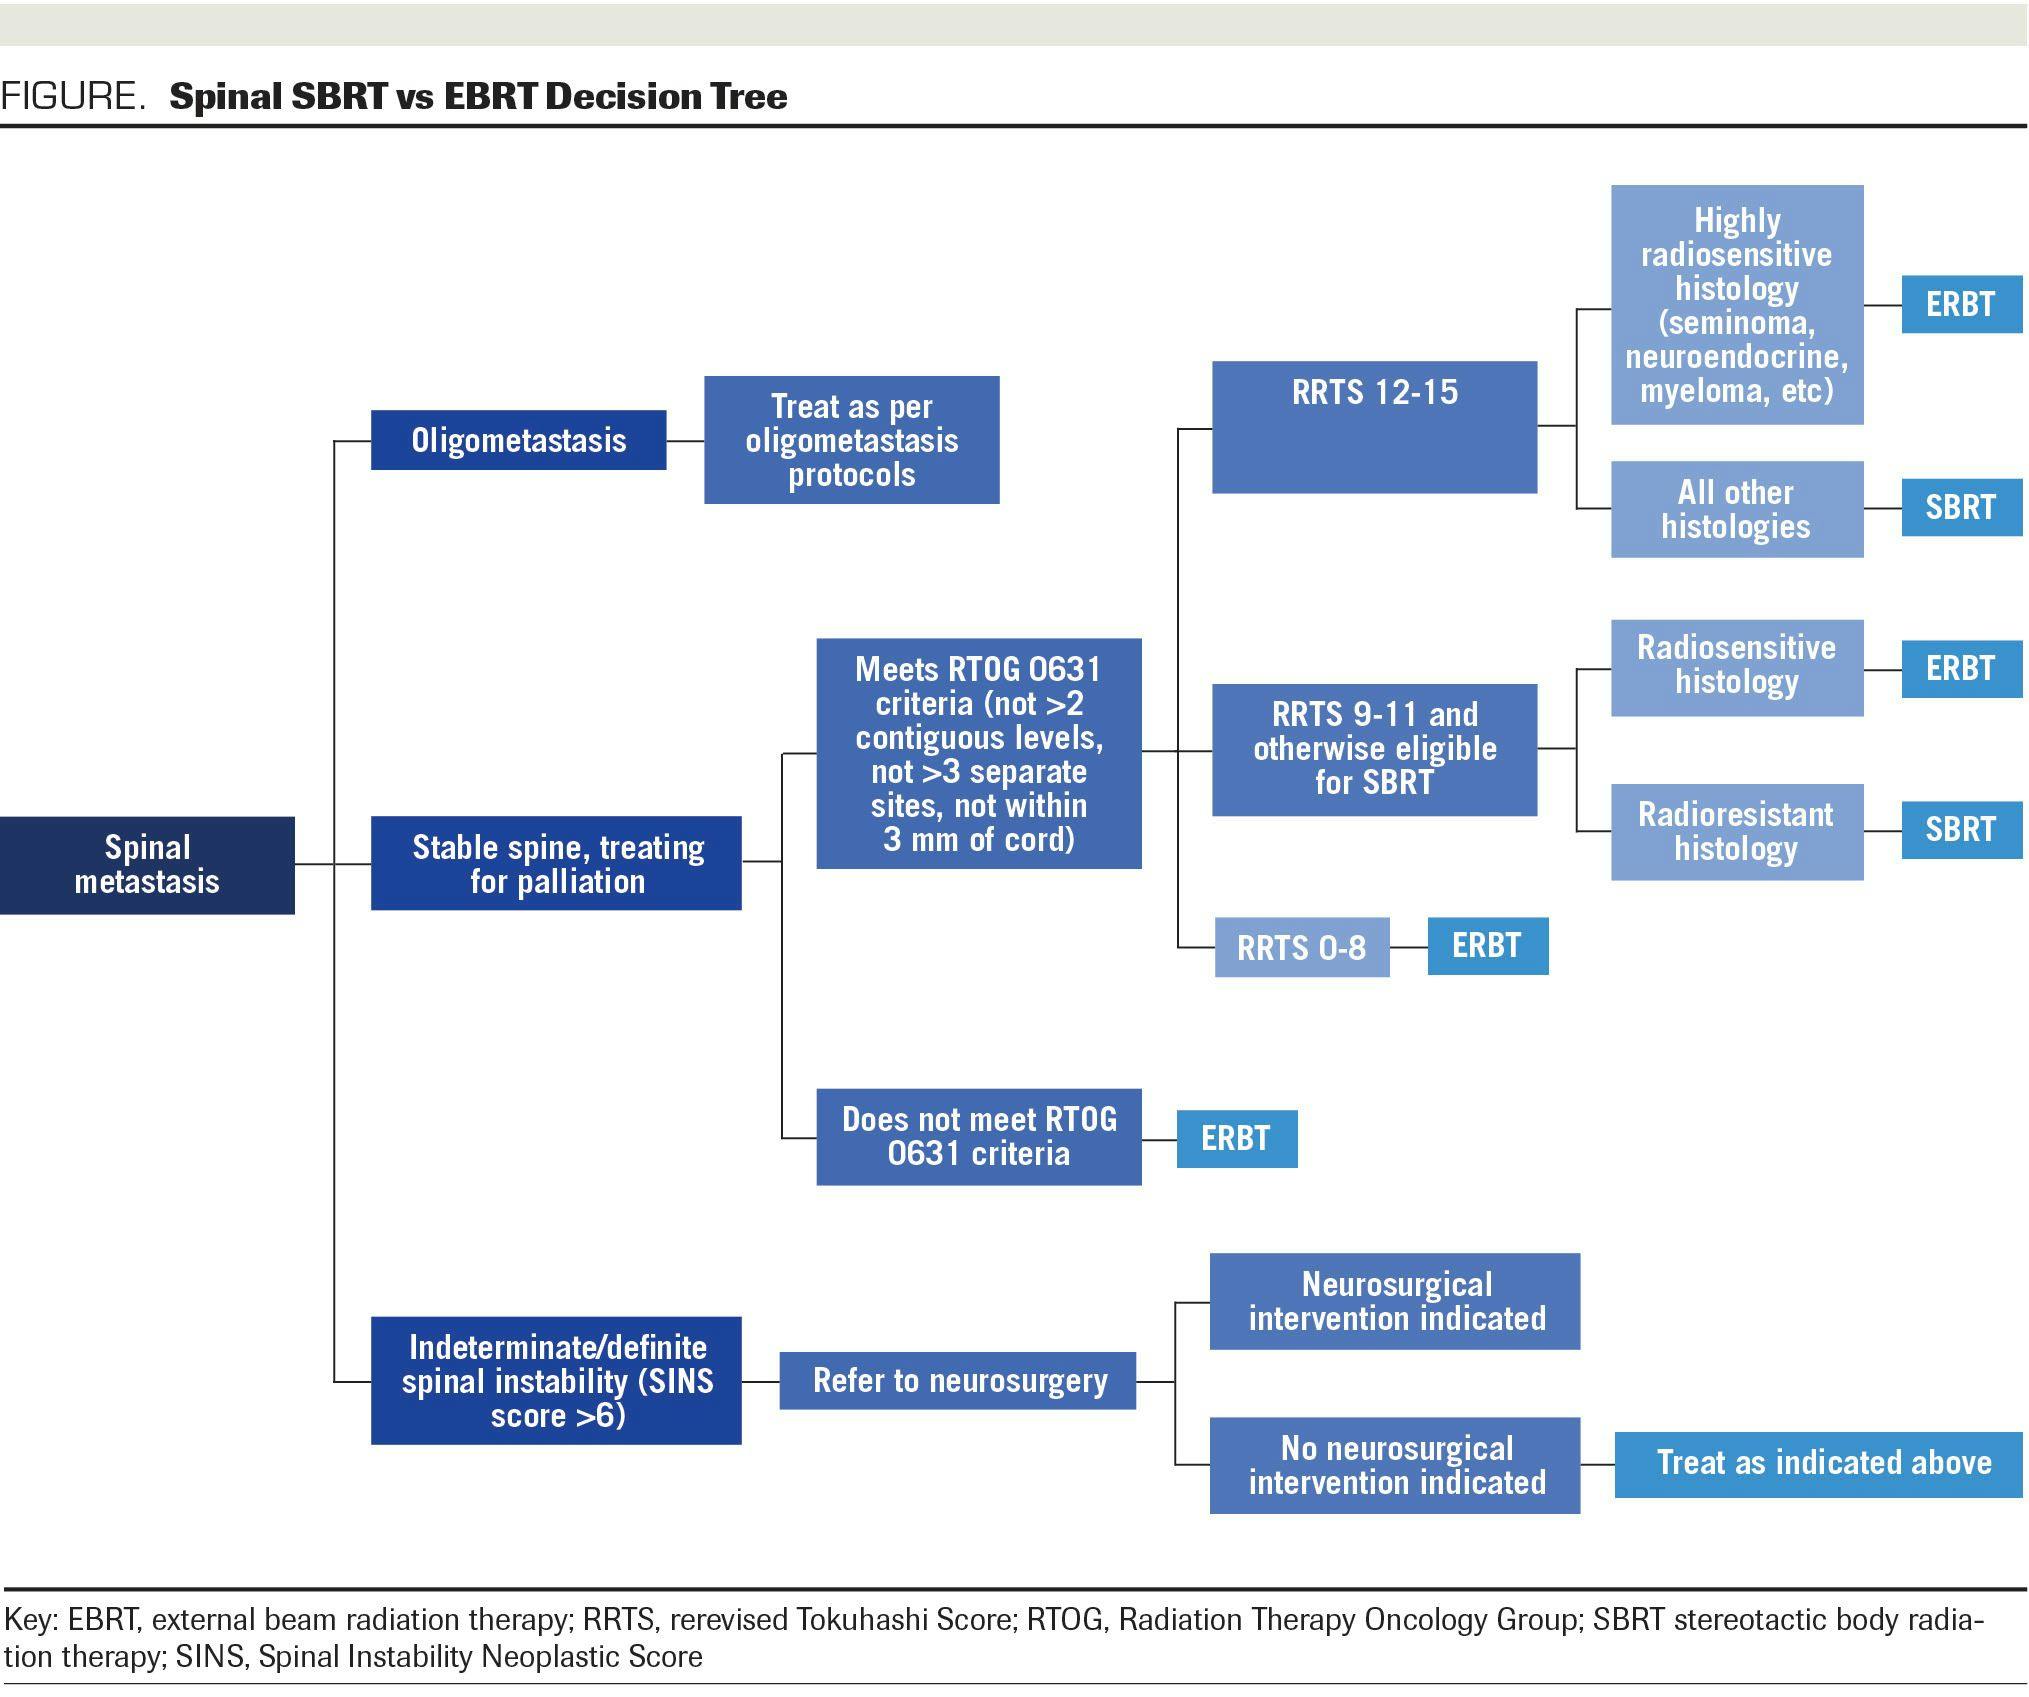 FIGURE. Spinal SBRT vs ERBT Decision Tree